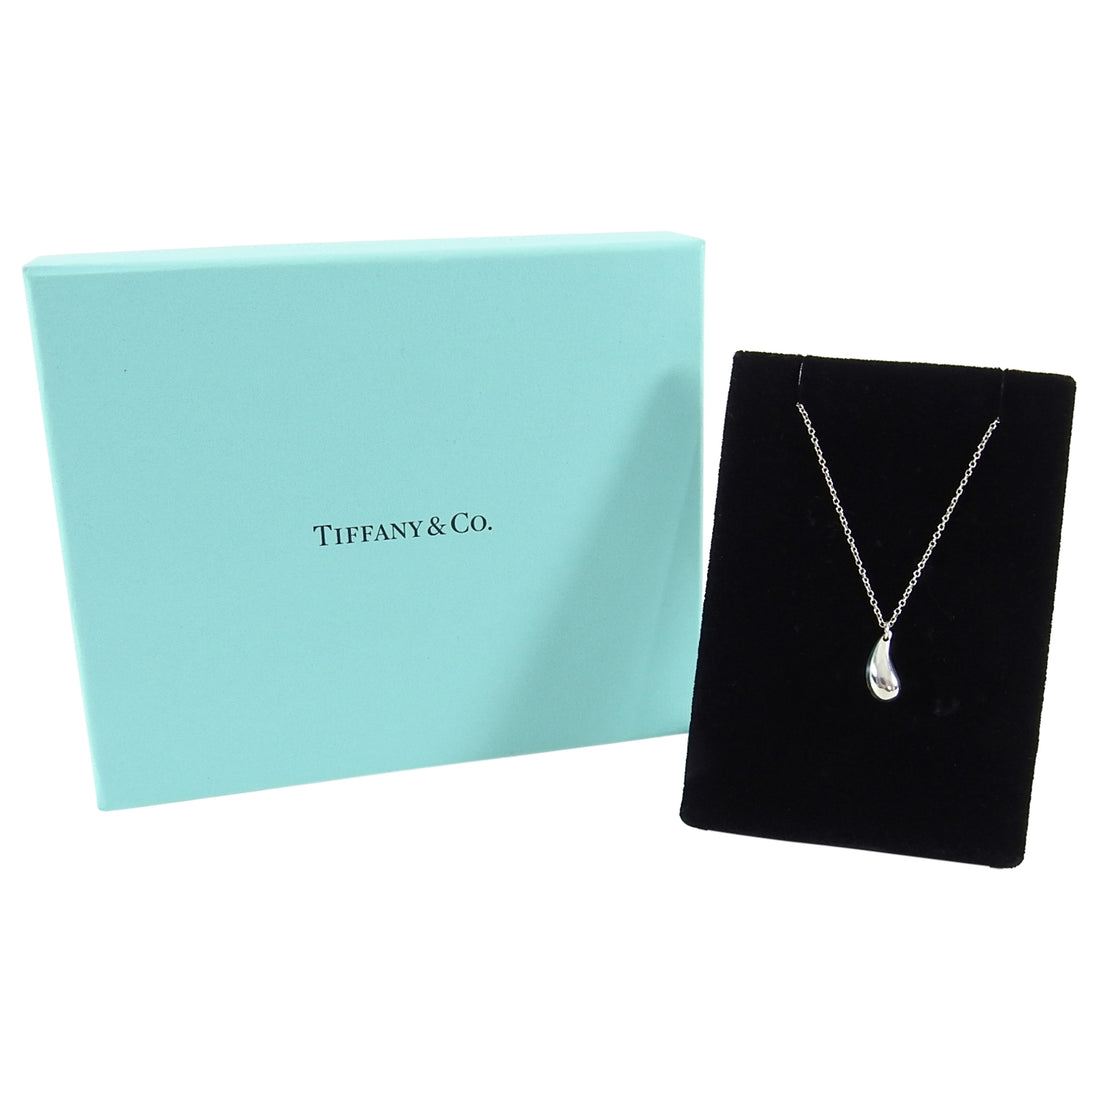 Tiffany & Co. Elsa Peretti Sterling Silver Tear Drop Pendant Necklace